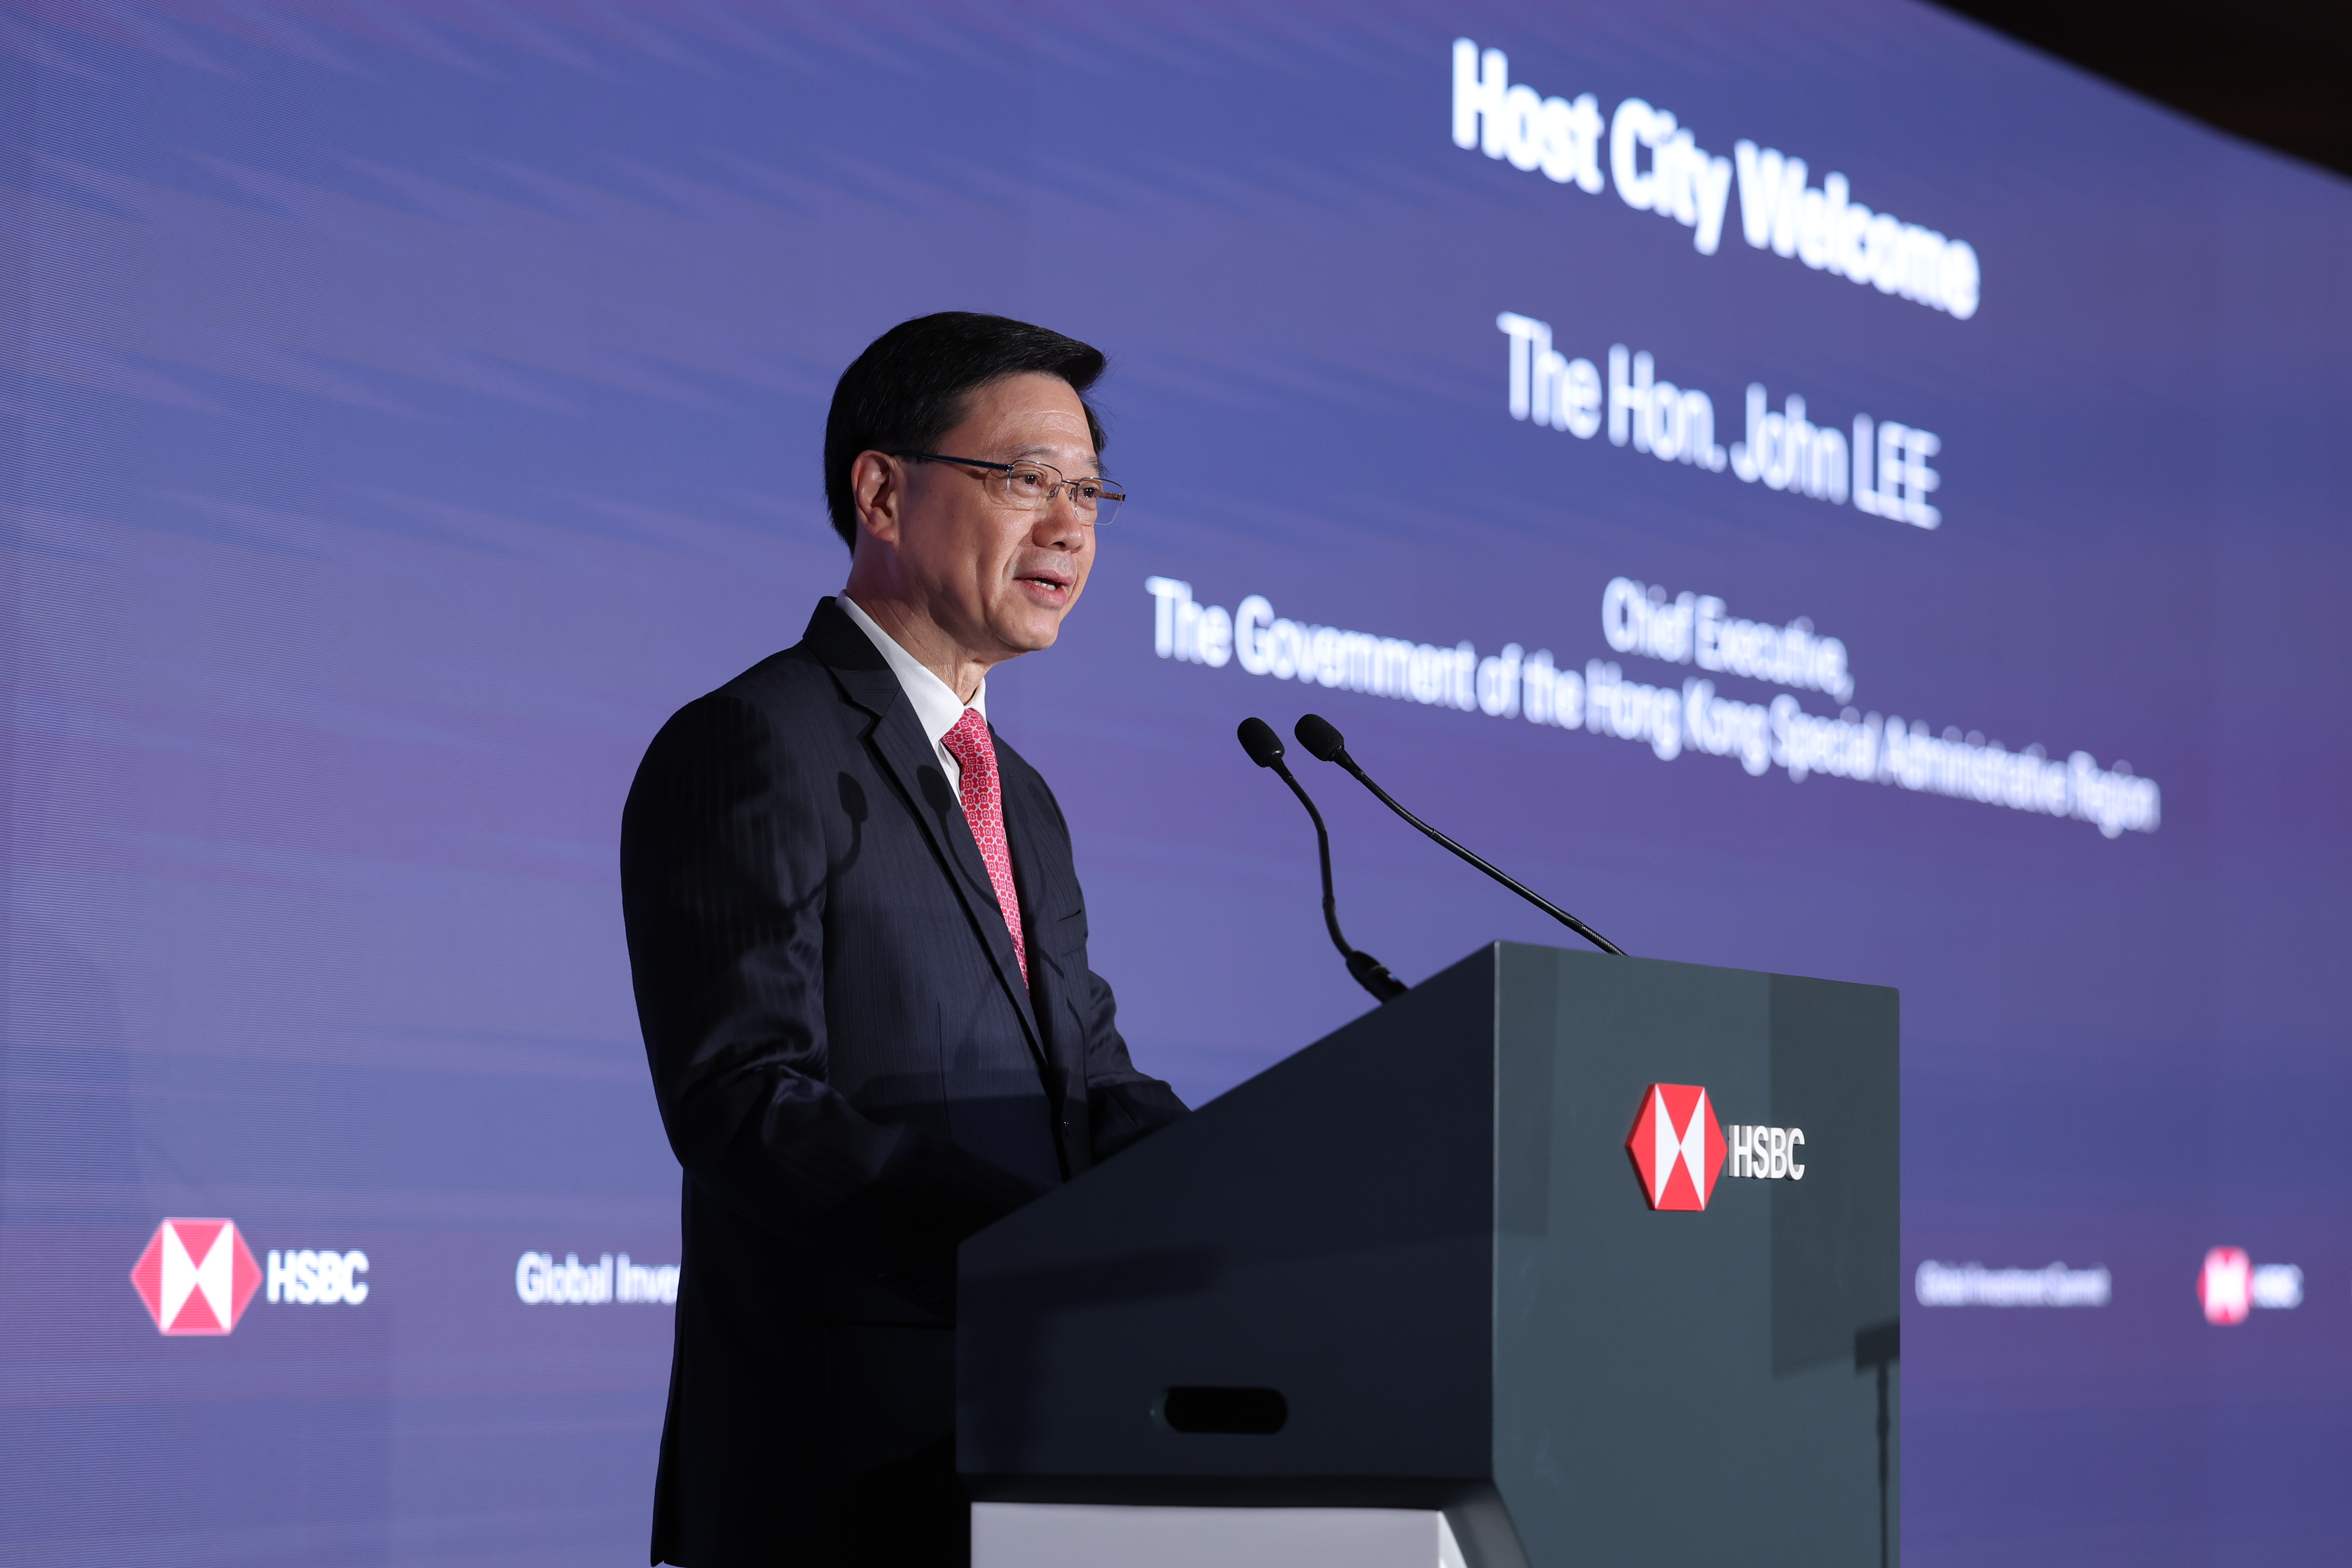 HSBC Global Investment Summit – John Lee_1